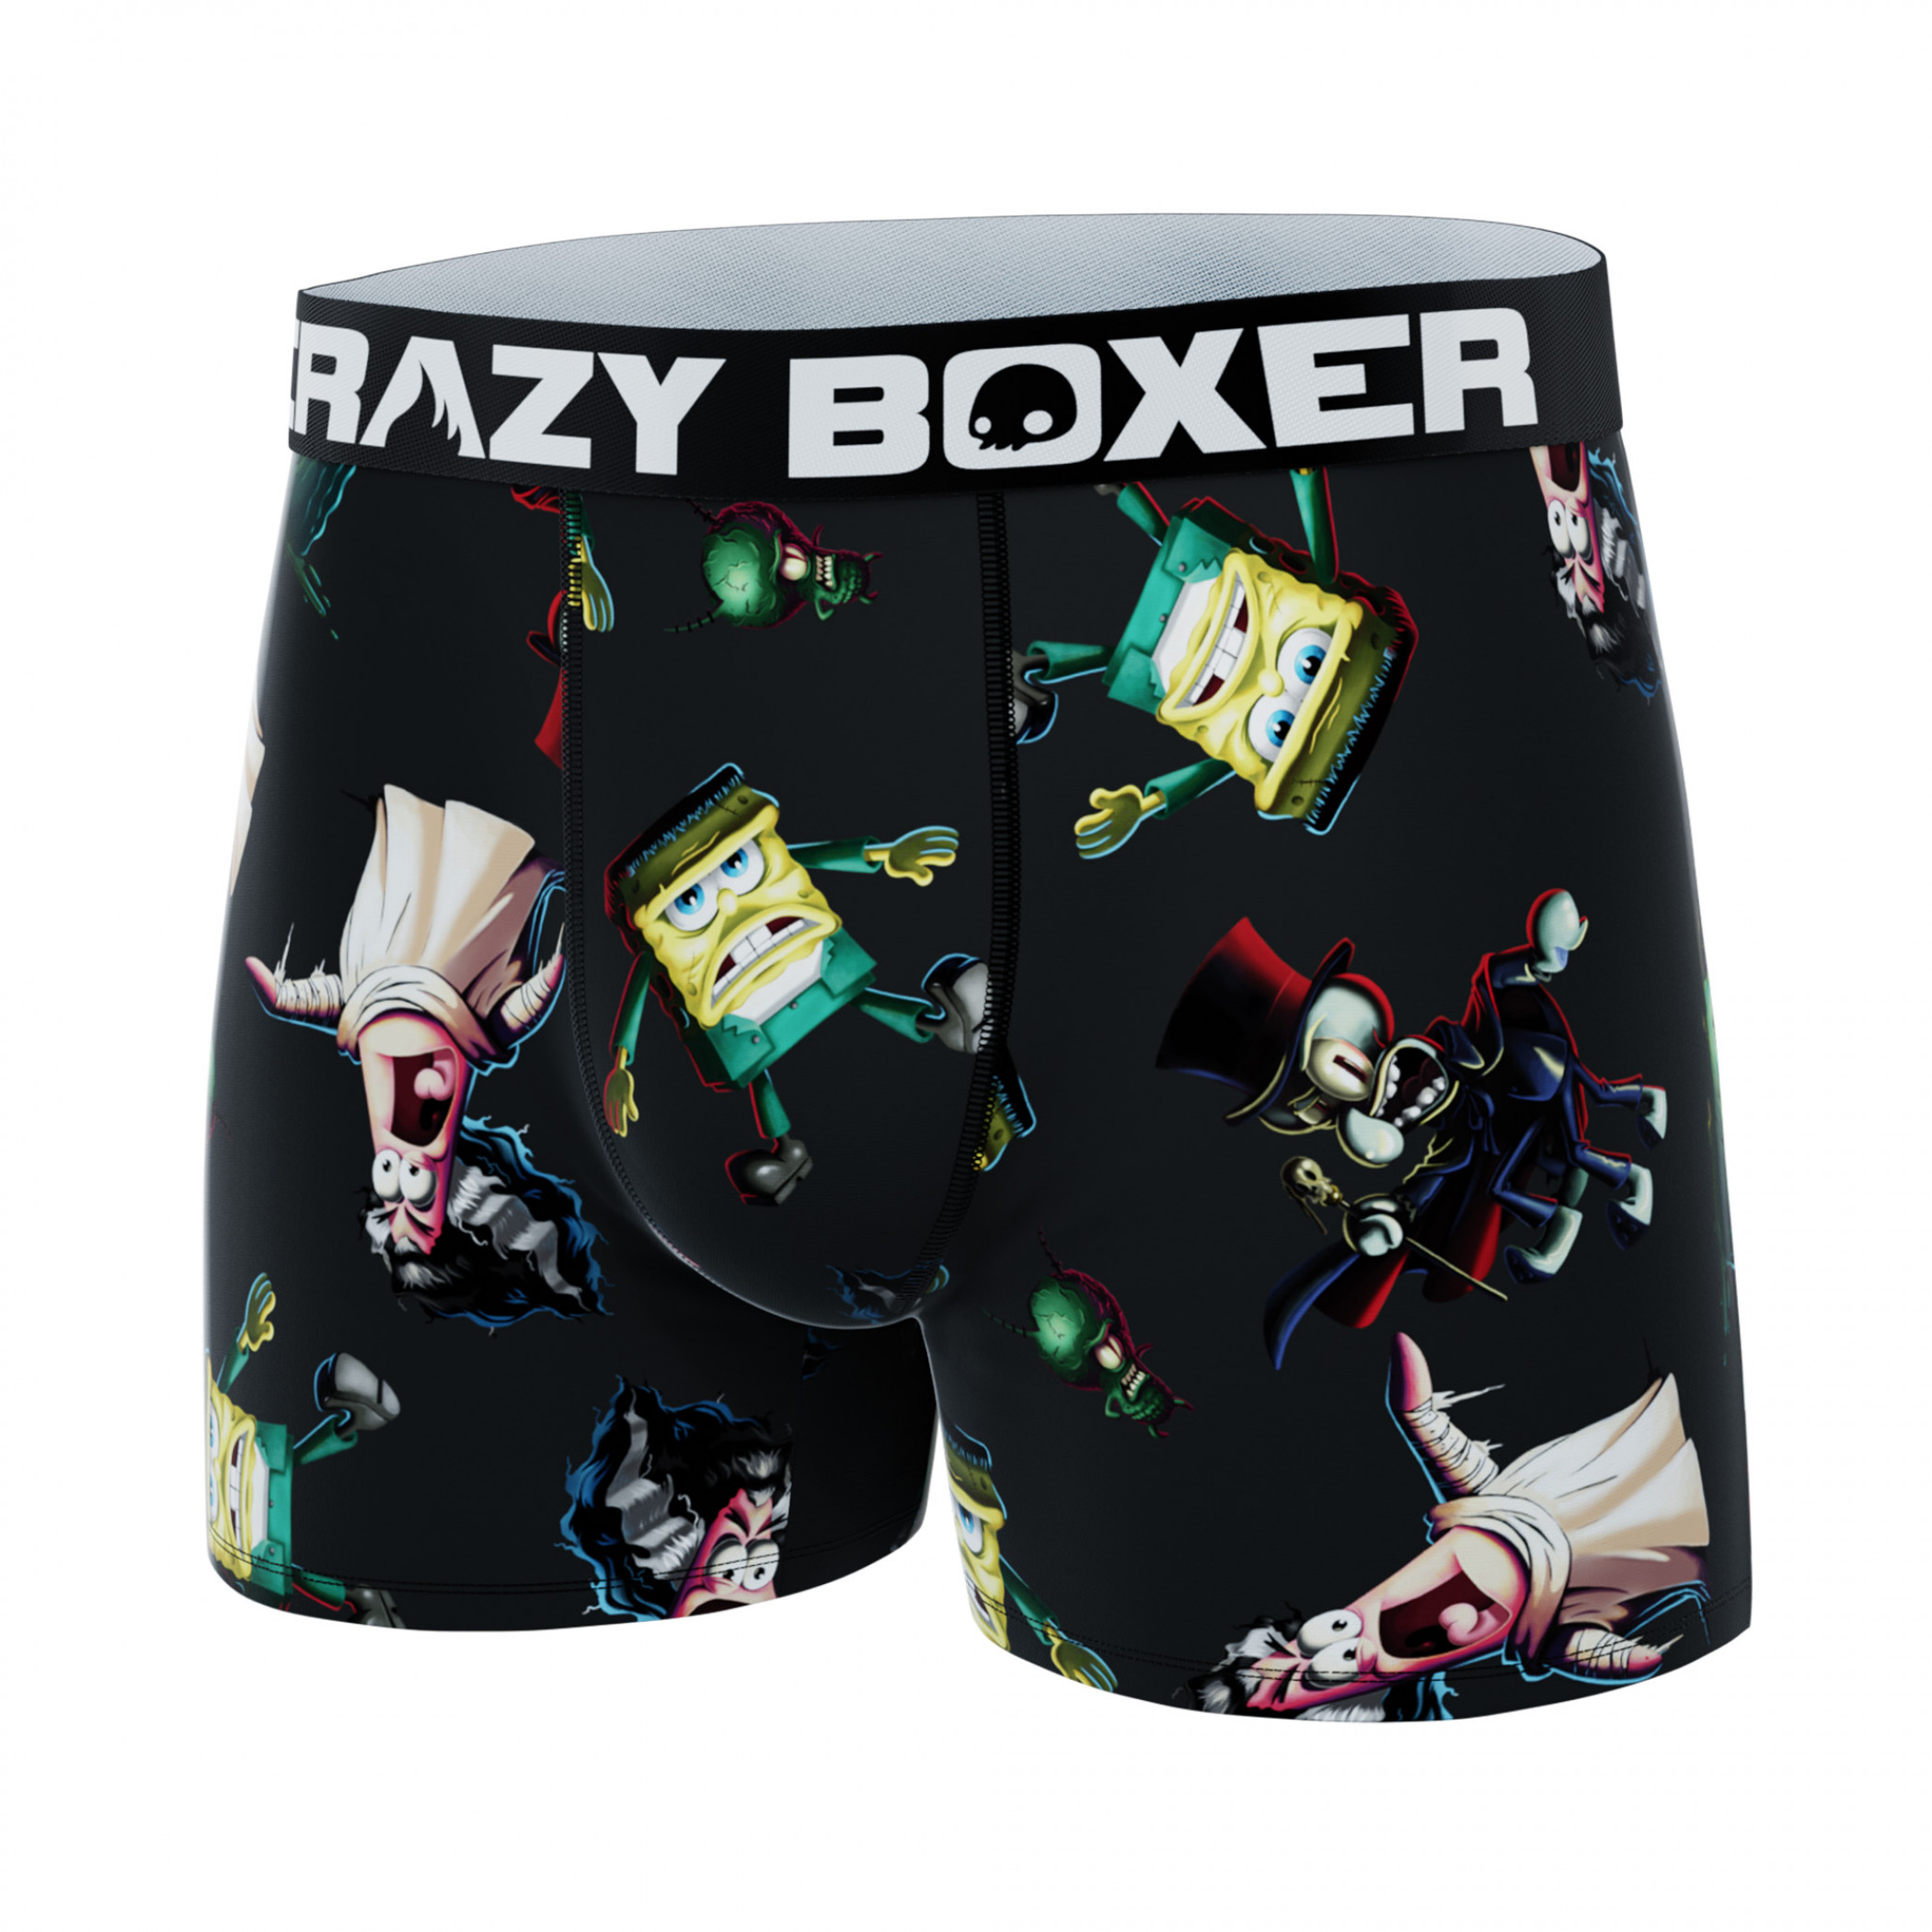 Crazy Boxer SpongeBob SquarePants Halloween Boxers in Novelty Packaging